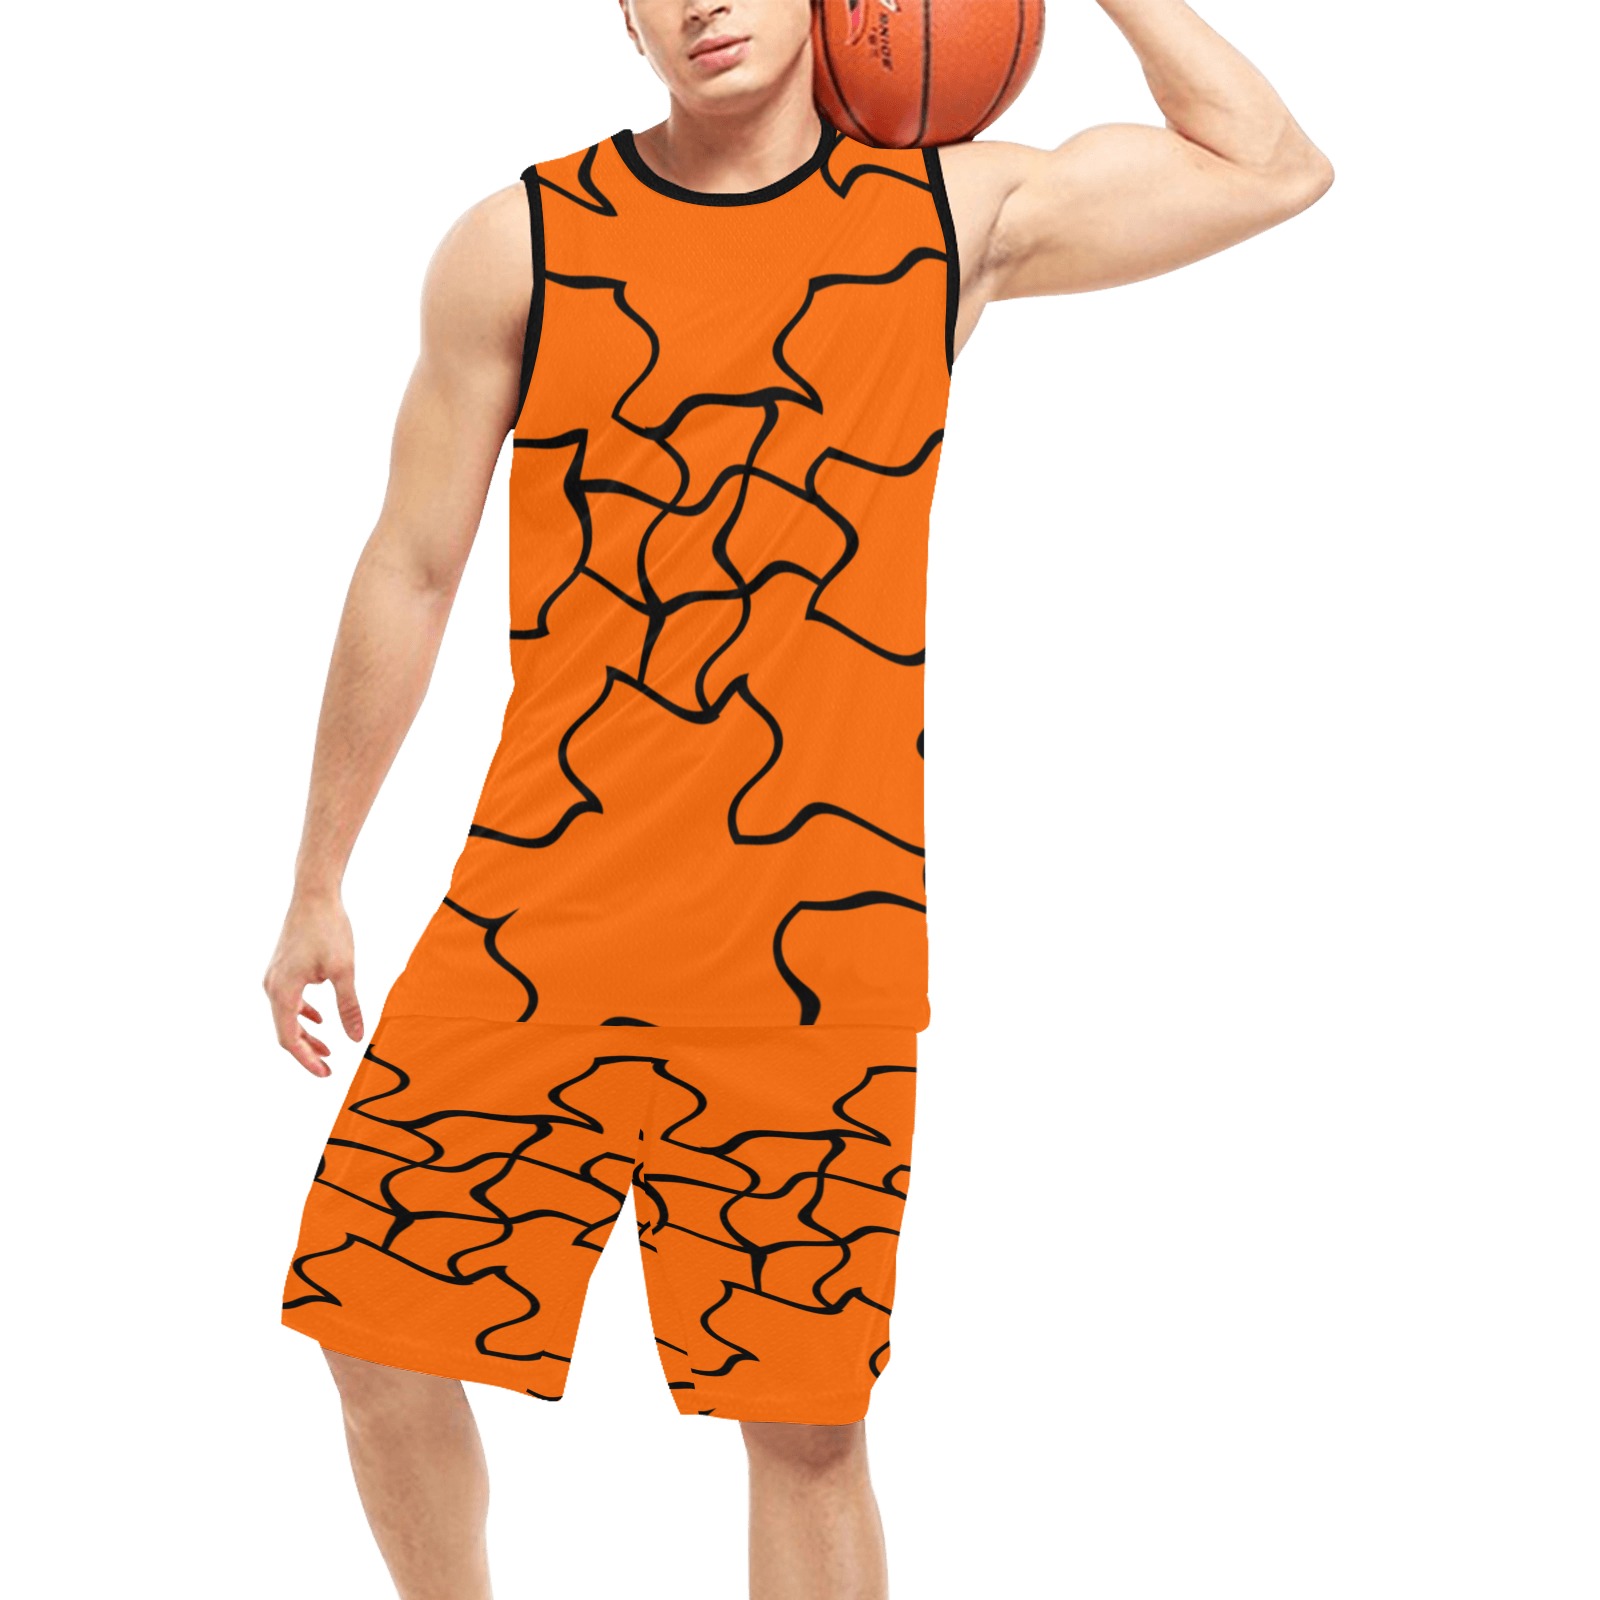 Black Interlocking Crosses Noisy orange Basketball Uniform with Pocket